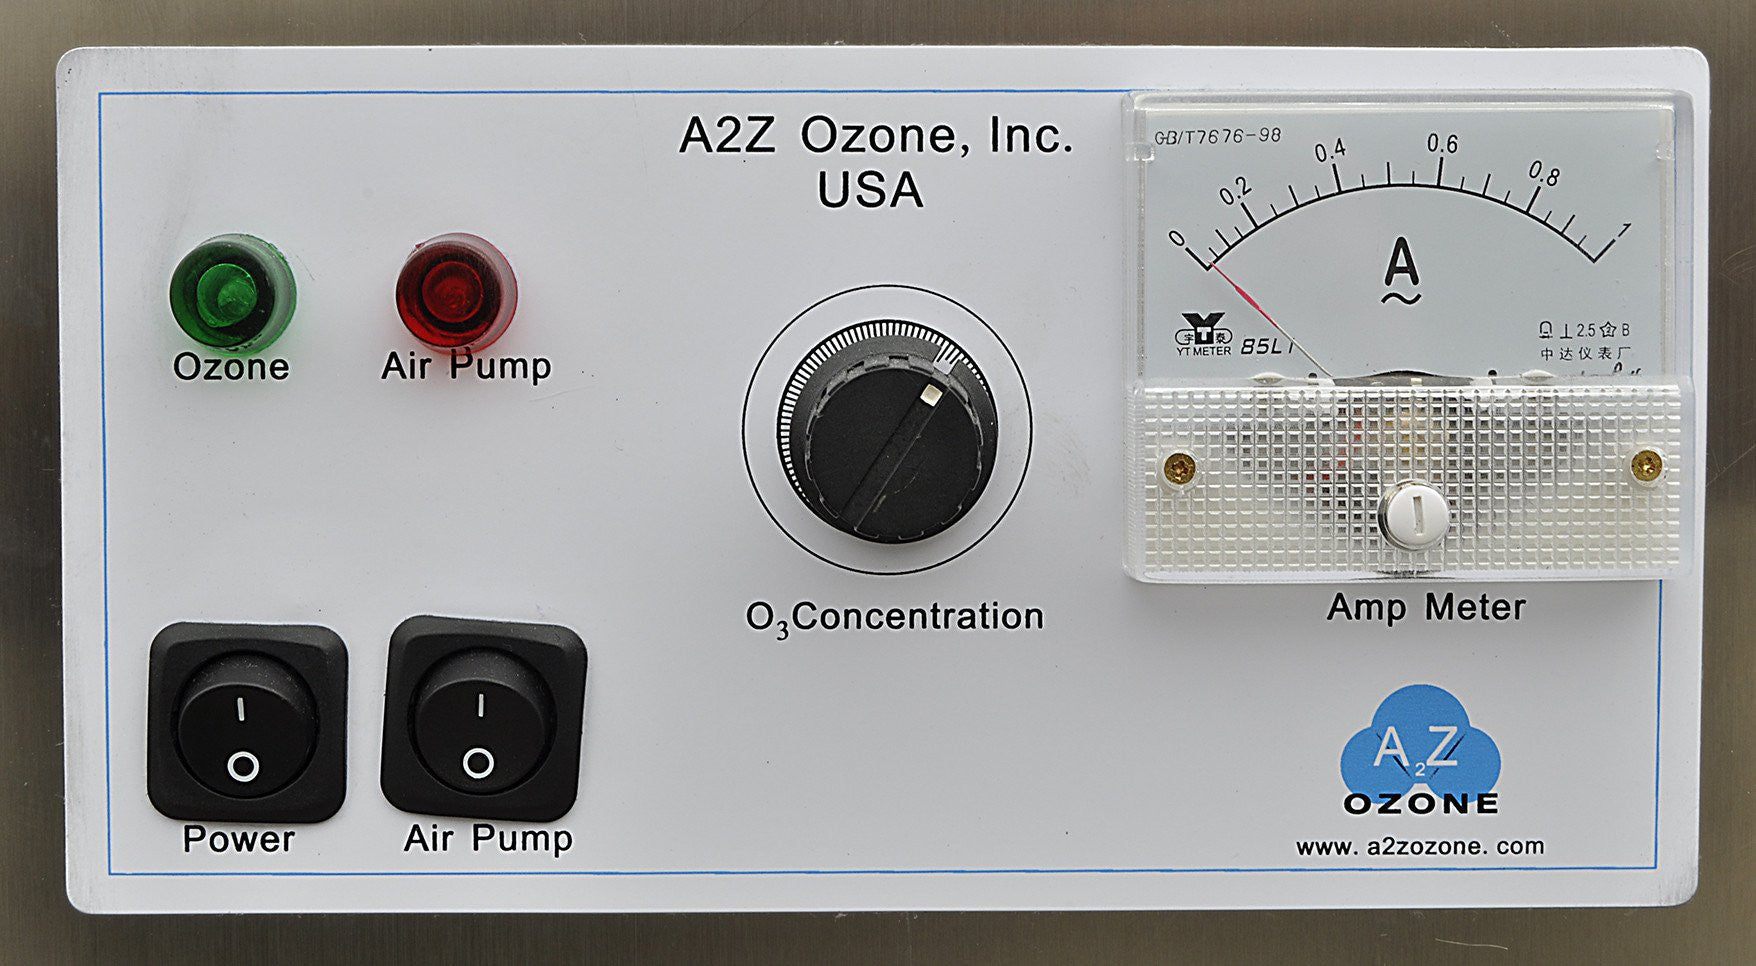 Z-3G Commercial Ozone Generator | A2Z Ozone